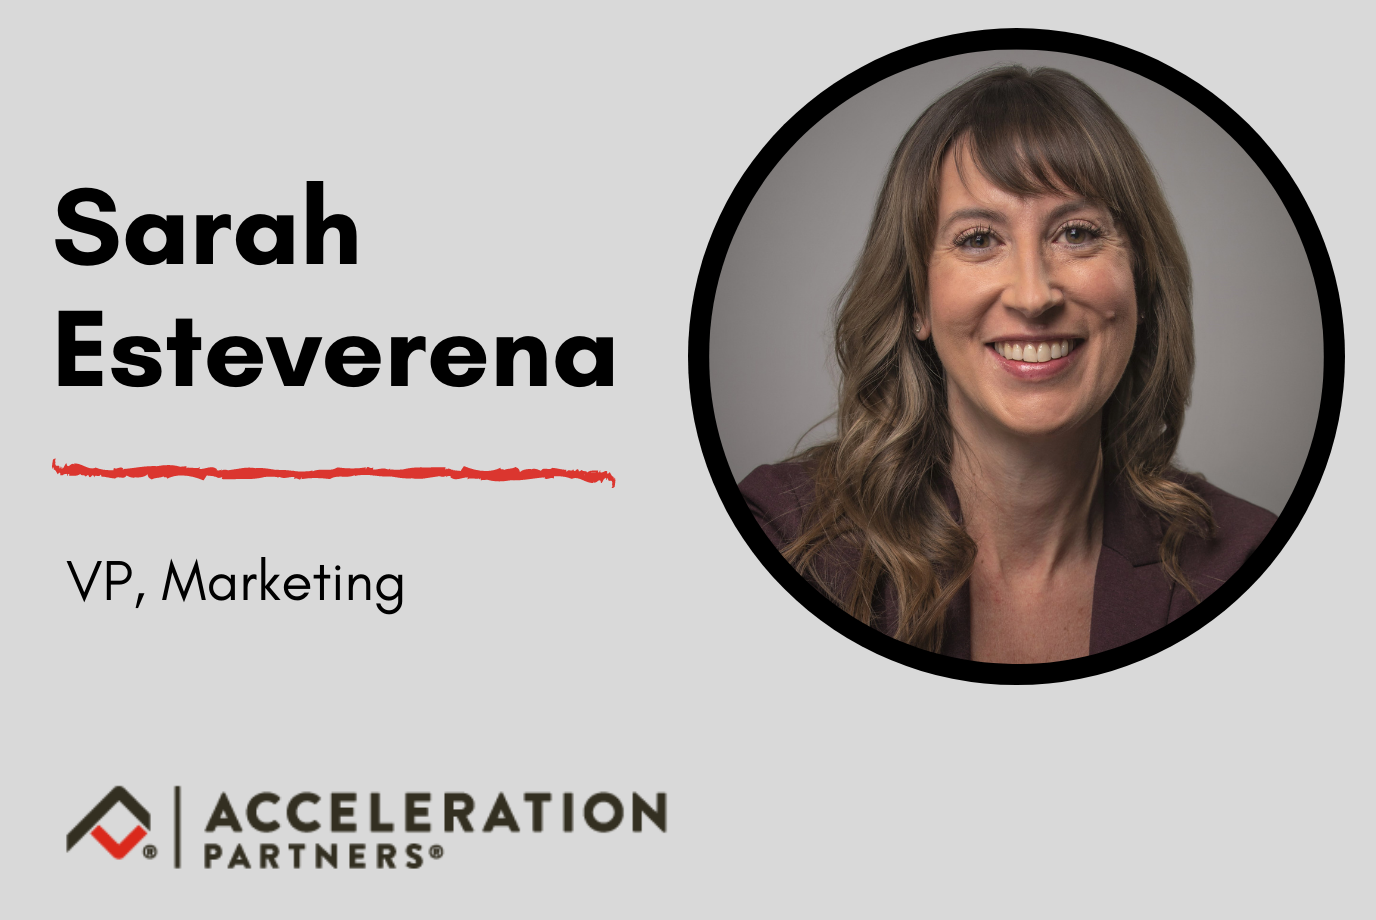 Acceleration Partners Welcomes Sarah Esteverena, New VP of Marketing!